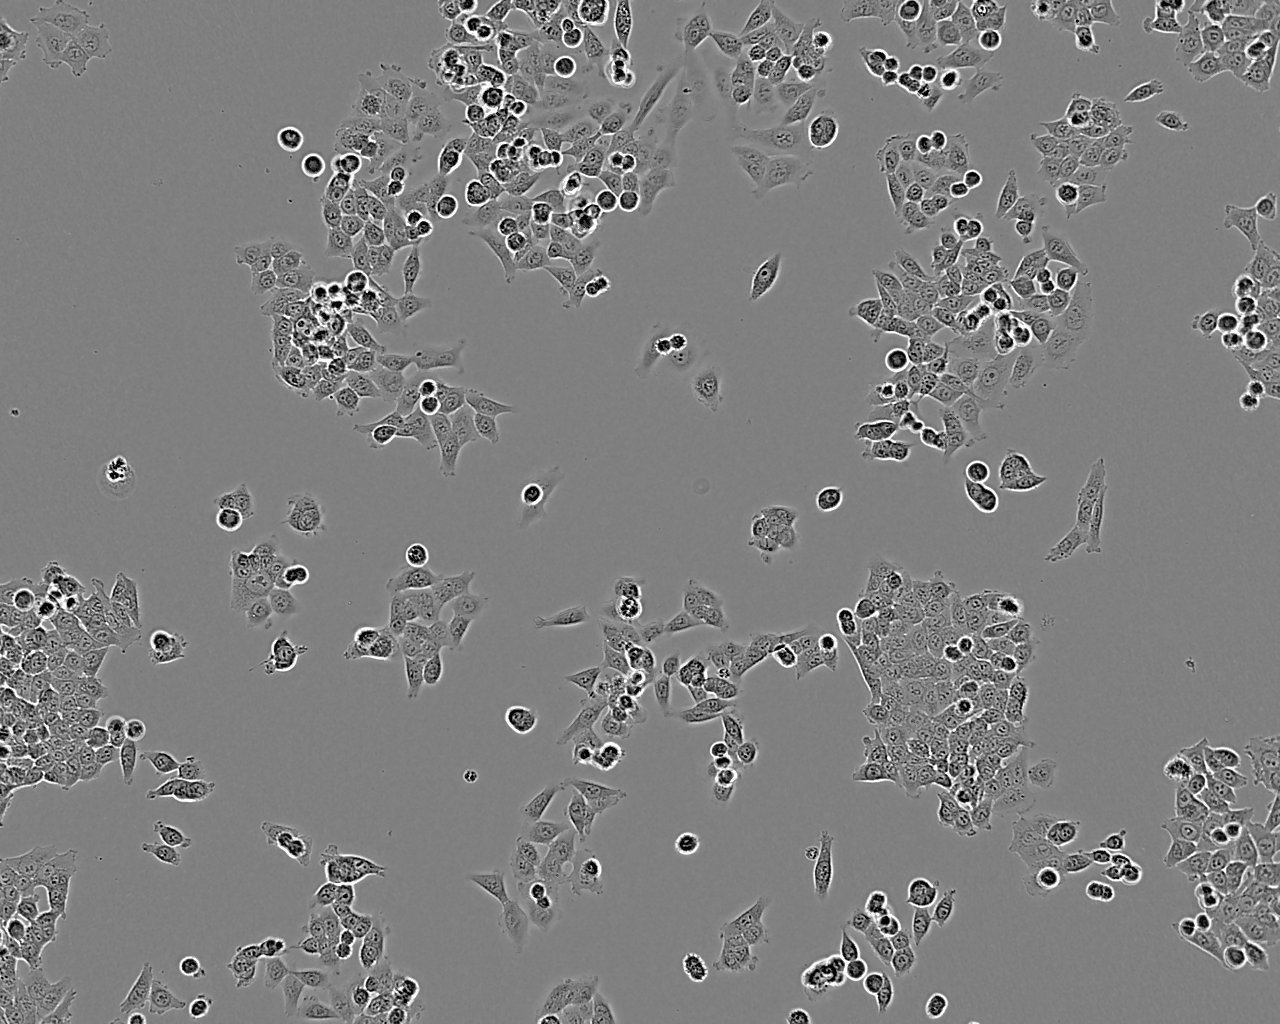 NCI-H28 epithelioid cells人恶性间皮瘤细胞系,NCI-H28 epithelioid cells